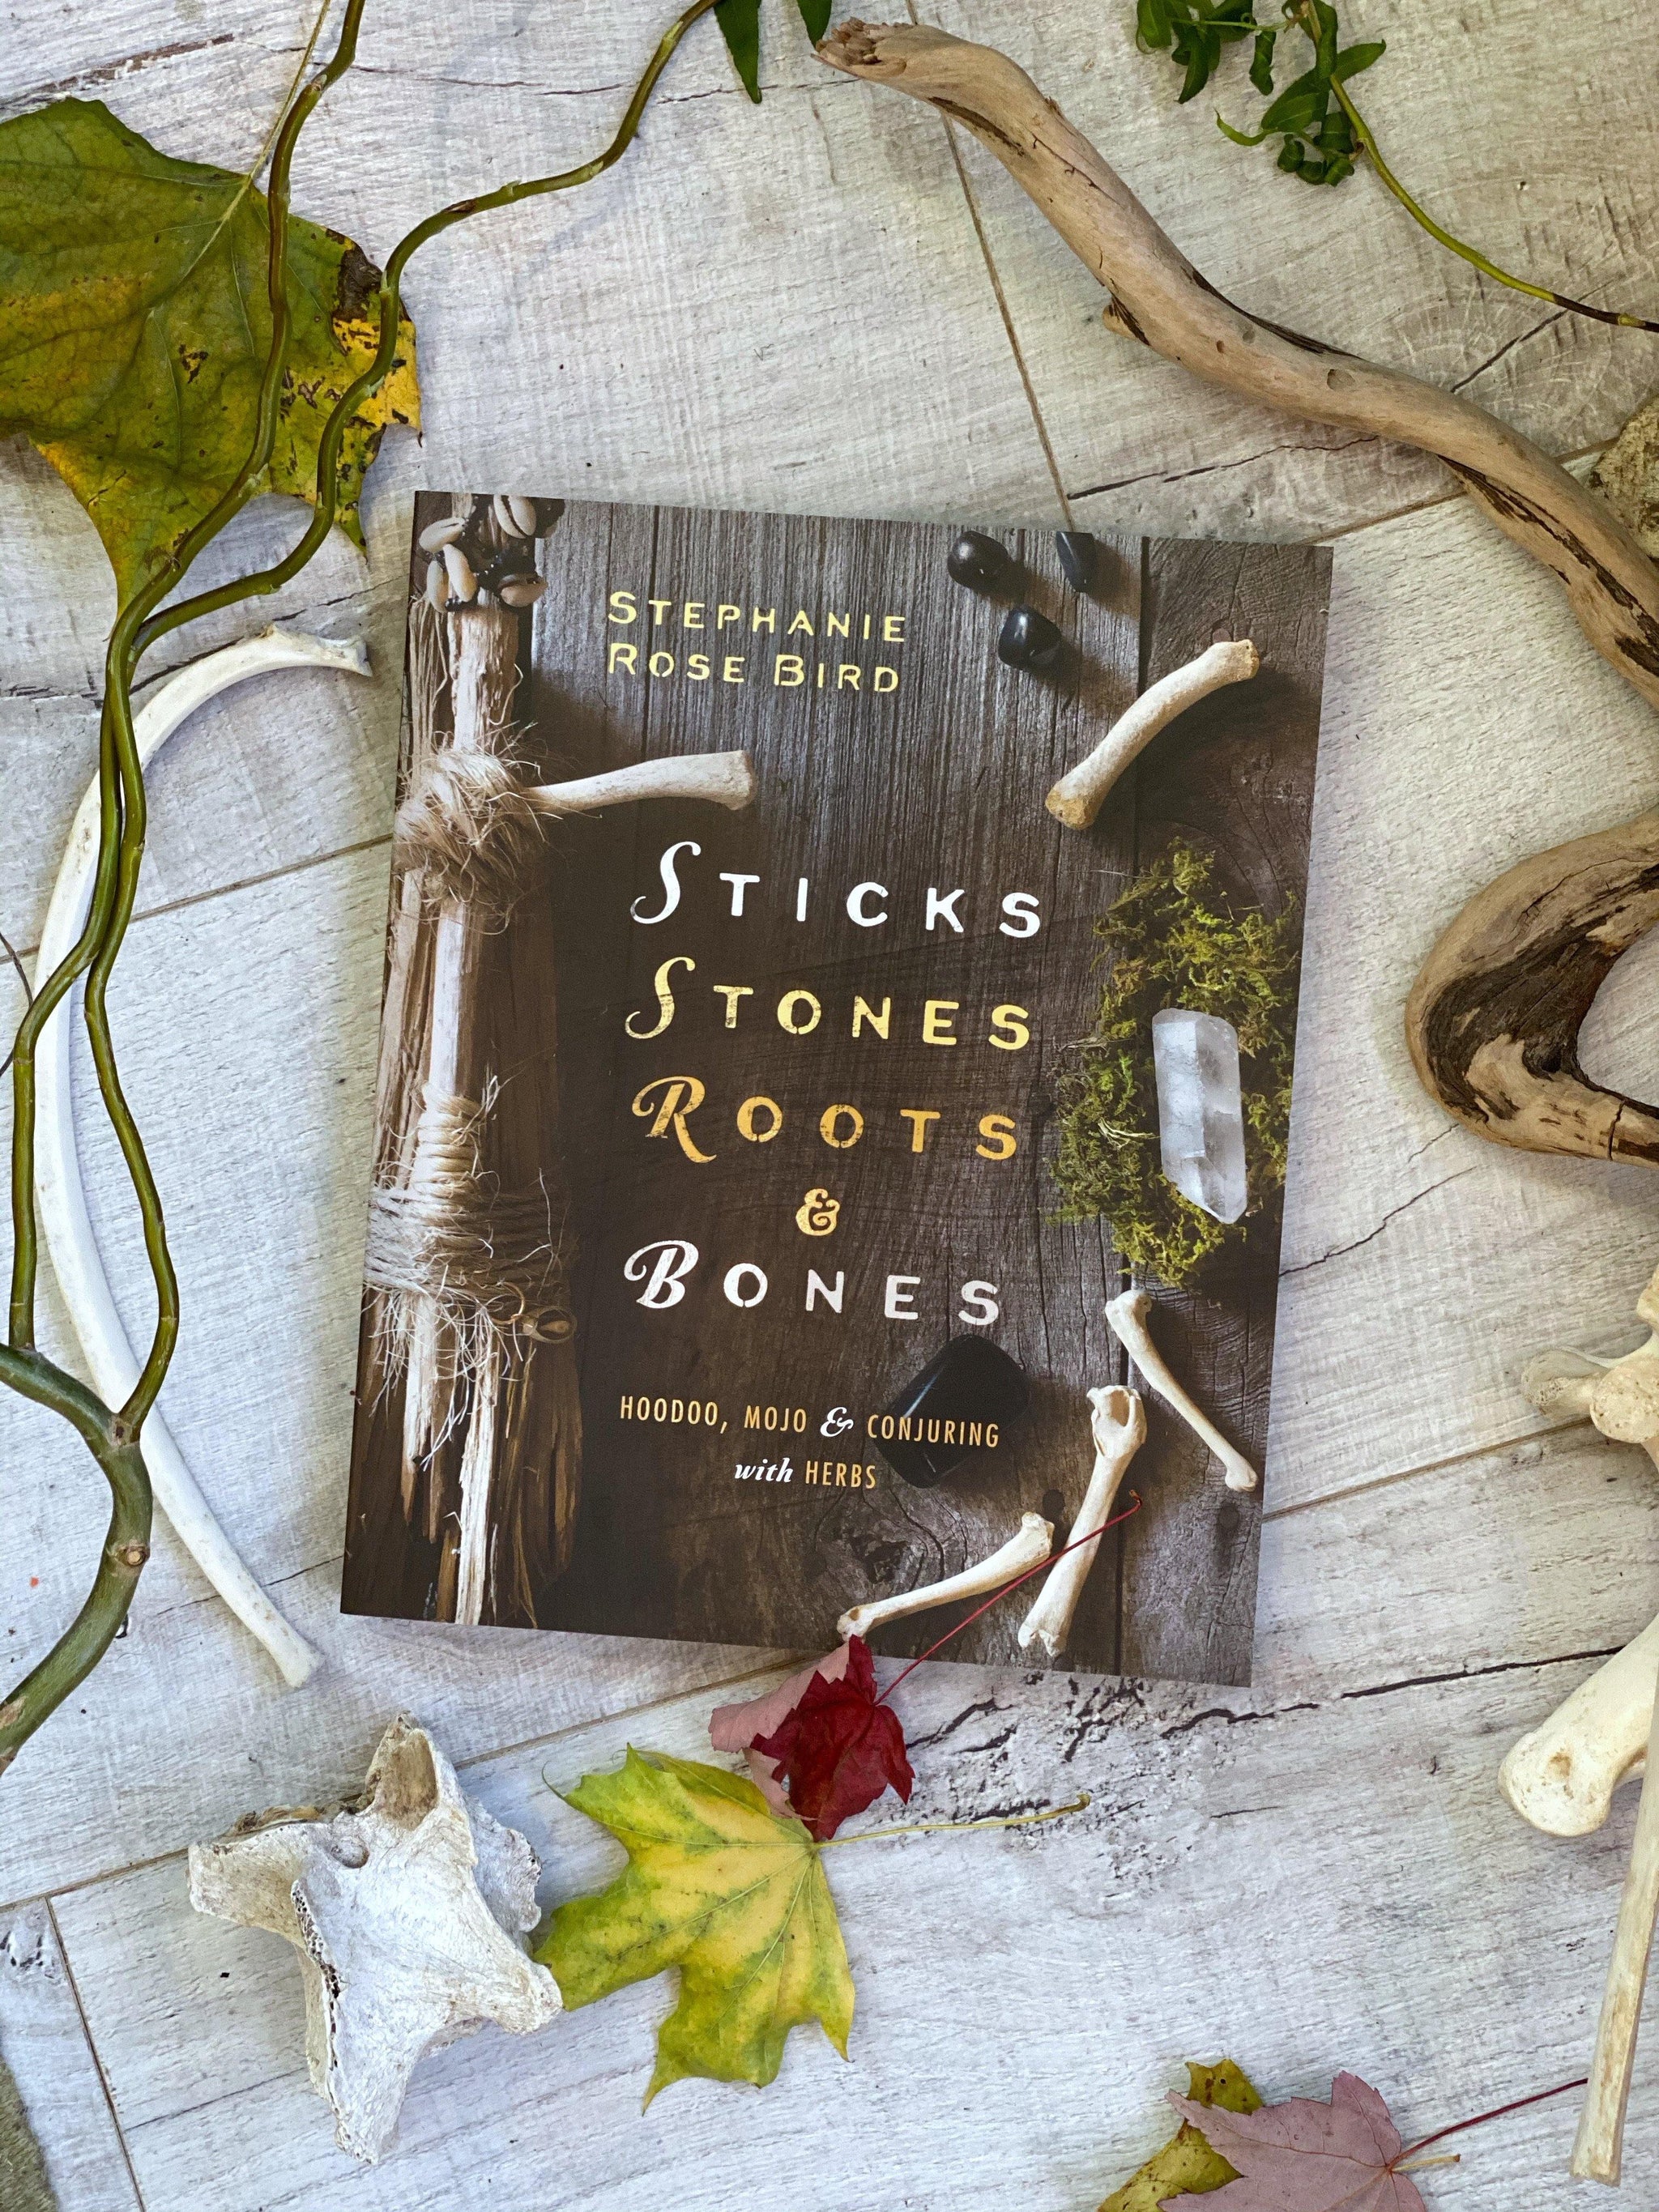 Sticks Stones Roots & Bones  Stephanie Bird - Occult Books Australia